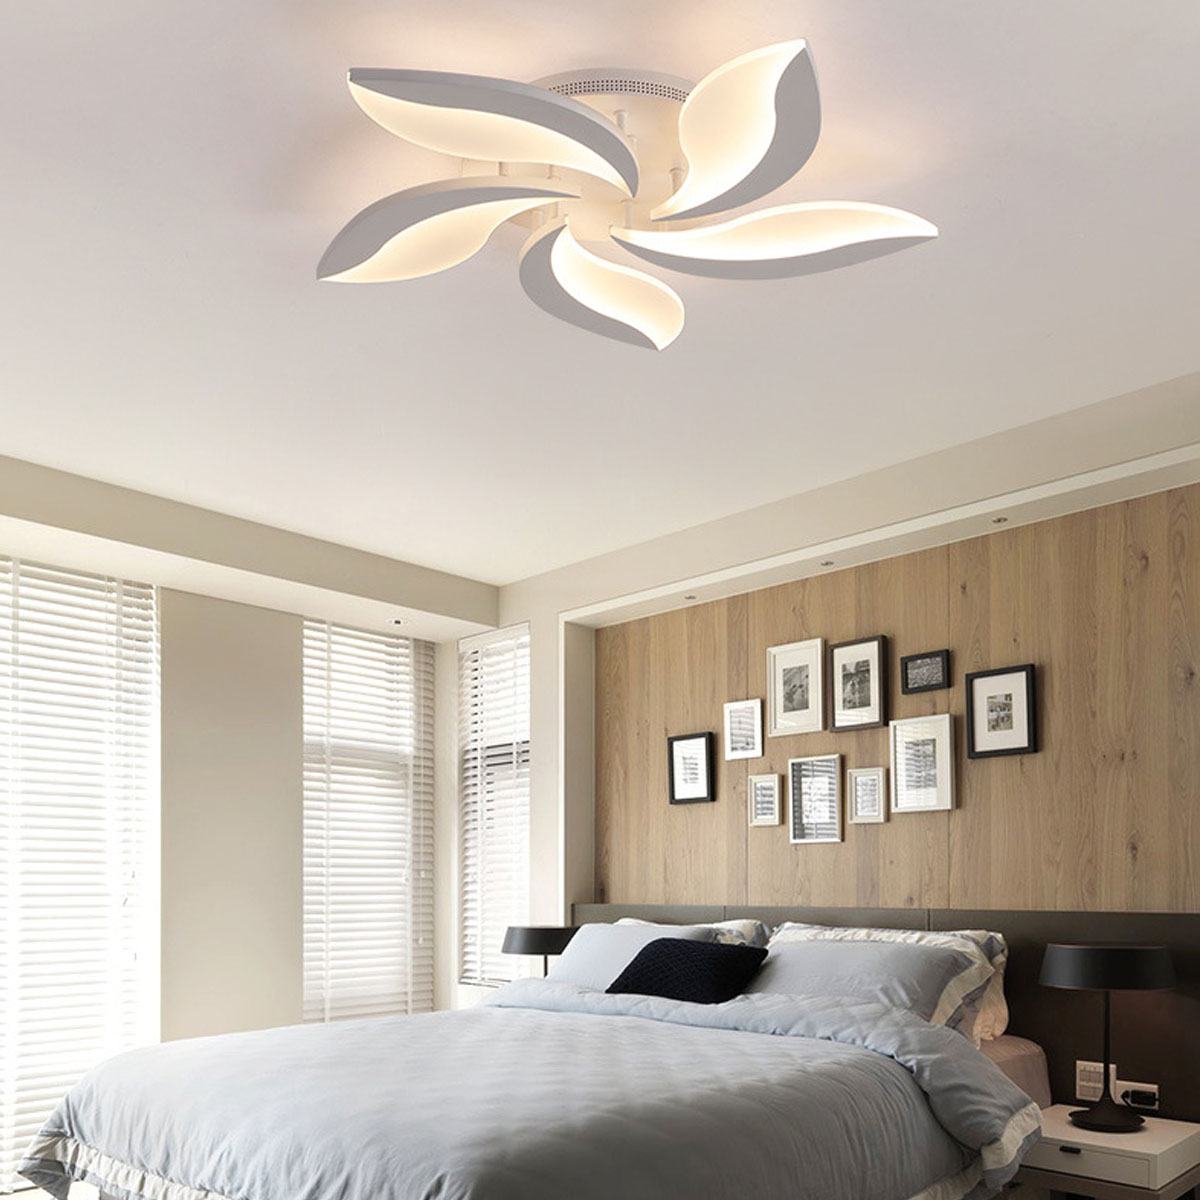 Find 110 220V LED Ceiling Light Fixture Pendant Lamp Lighting Flush Mount Room Chandelier for Sale on Gipsybee.com with cryptocurrencies